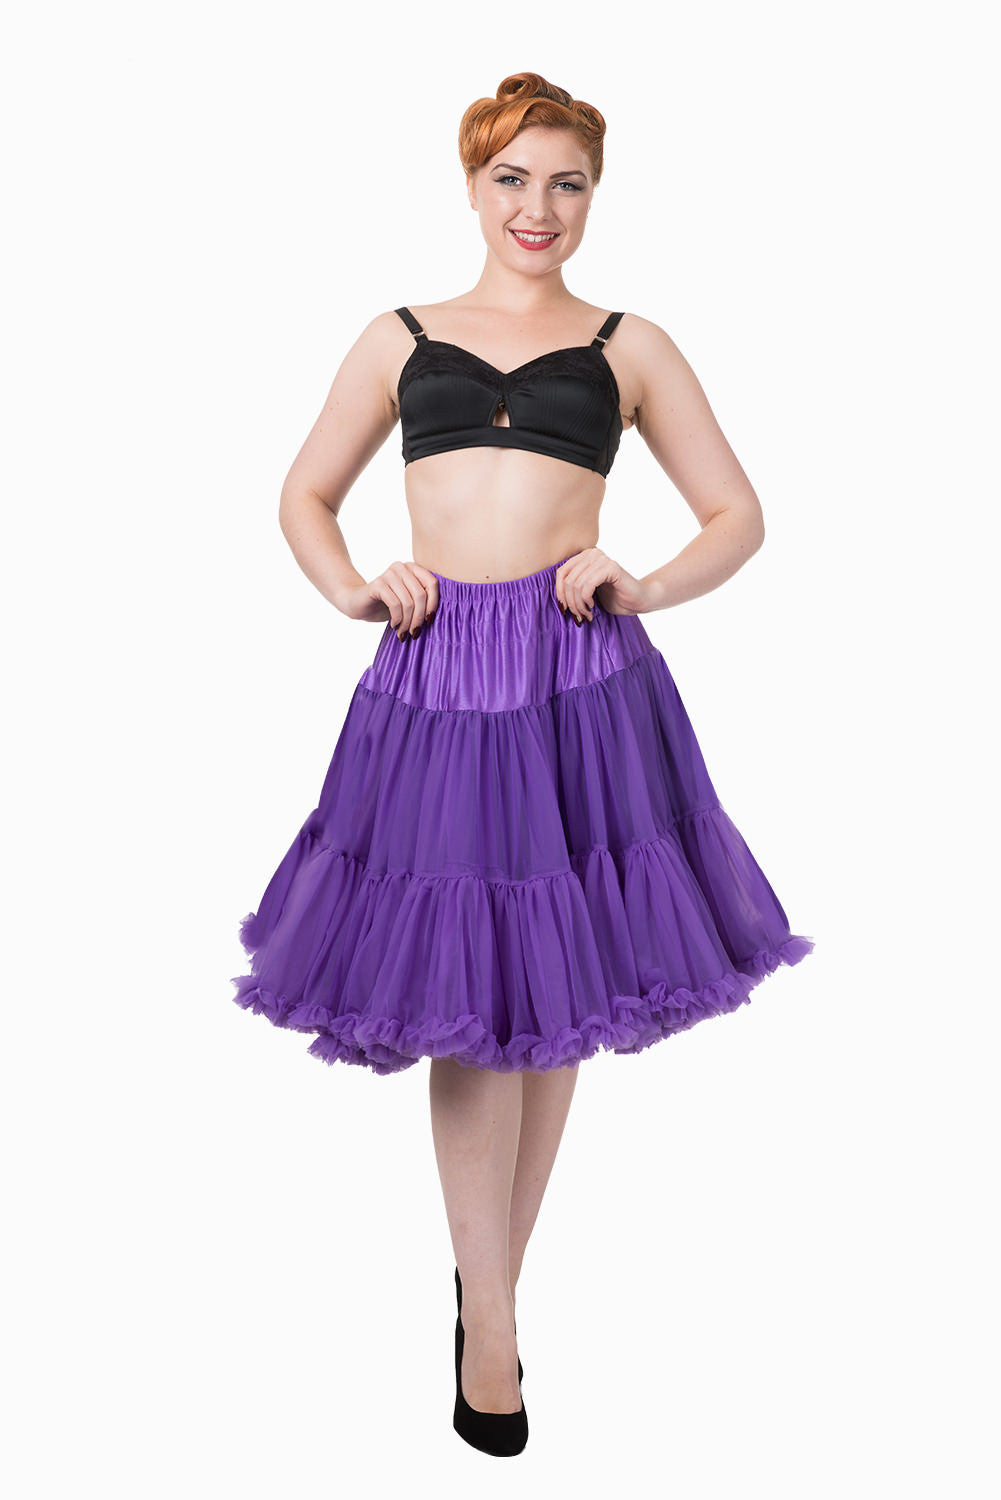 Starlite Petticoat in Purple - Natasha Marie Clothing